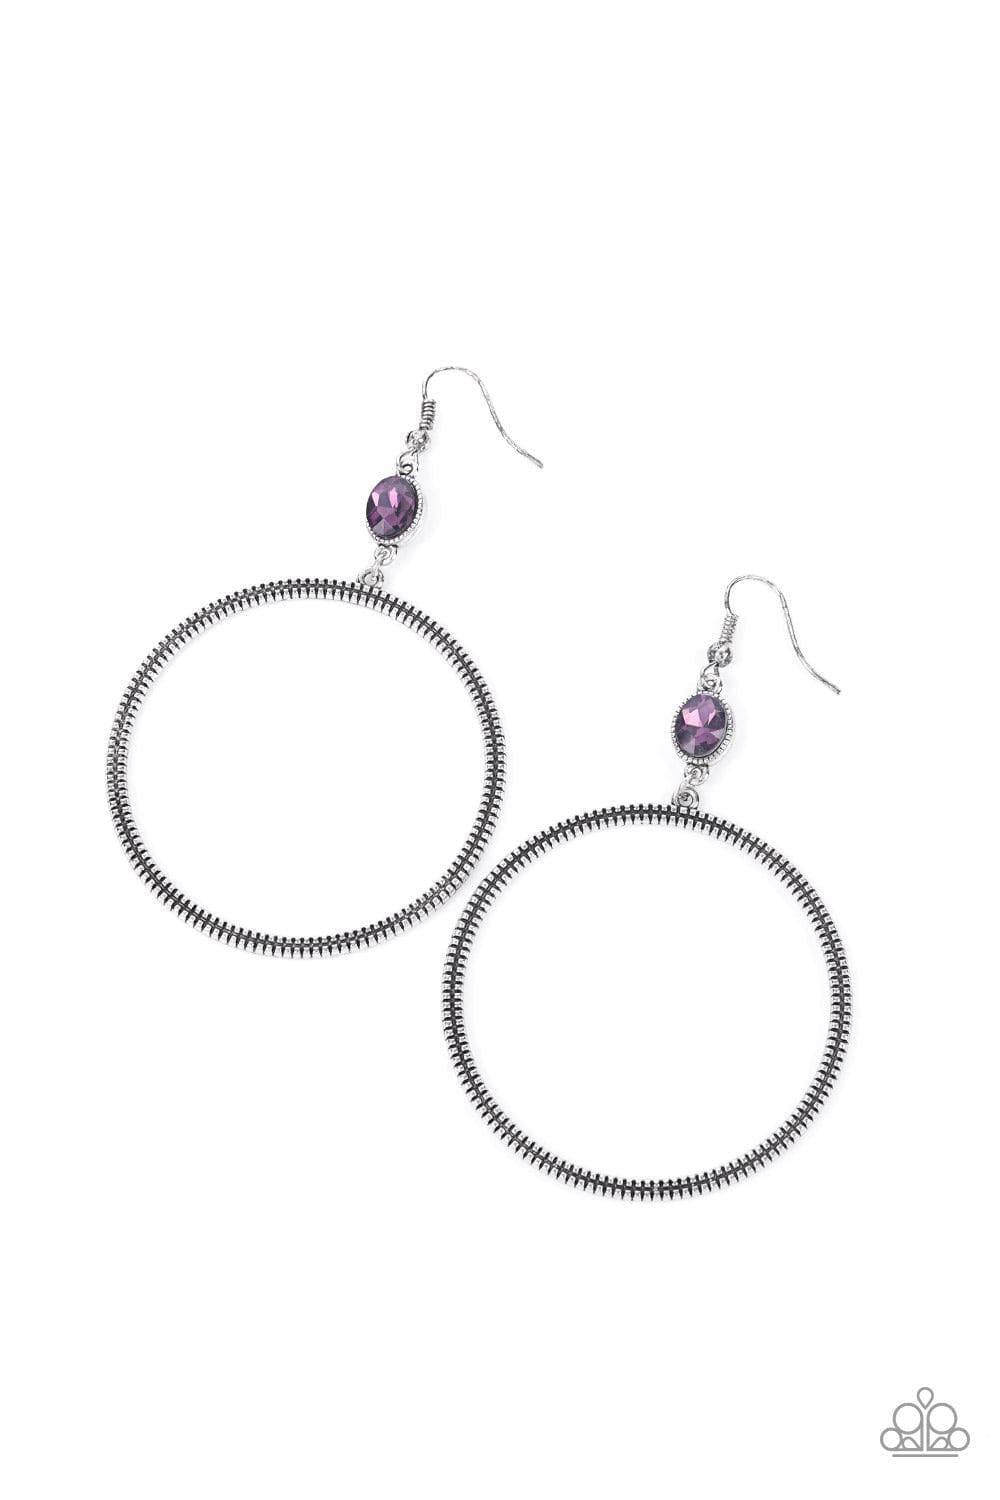 Paparazzi Accessories - Work That Circuit - Purple Earrings - Bling by JessieK